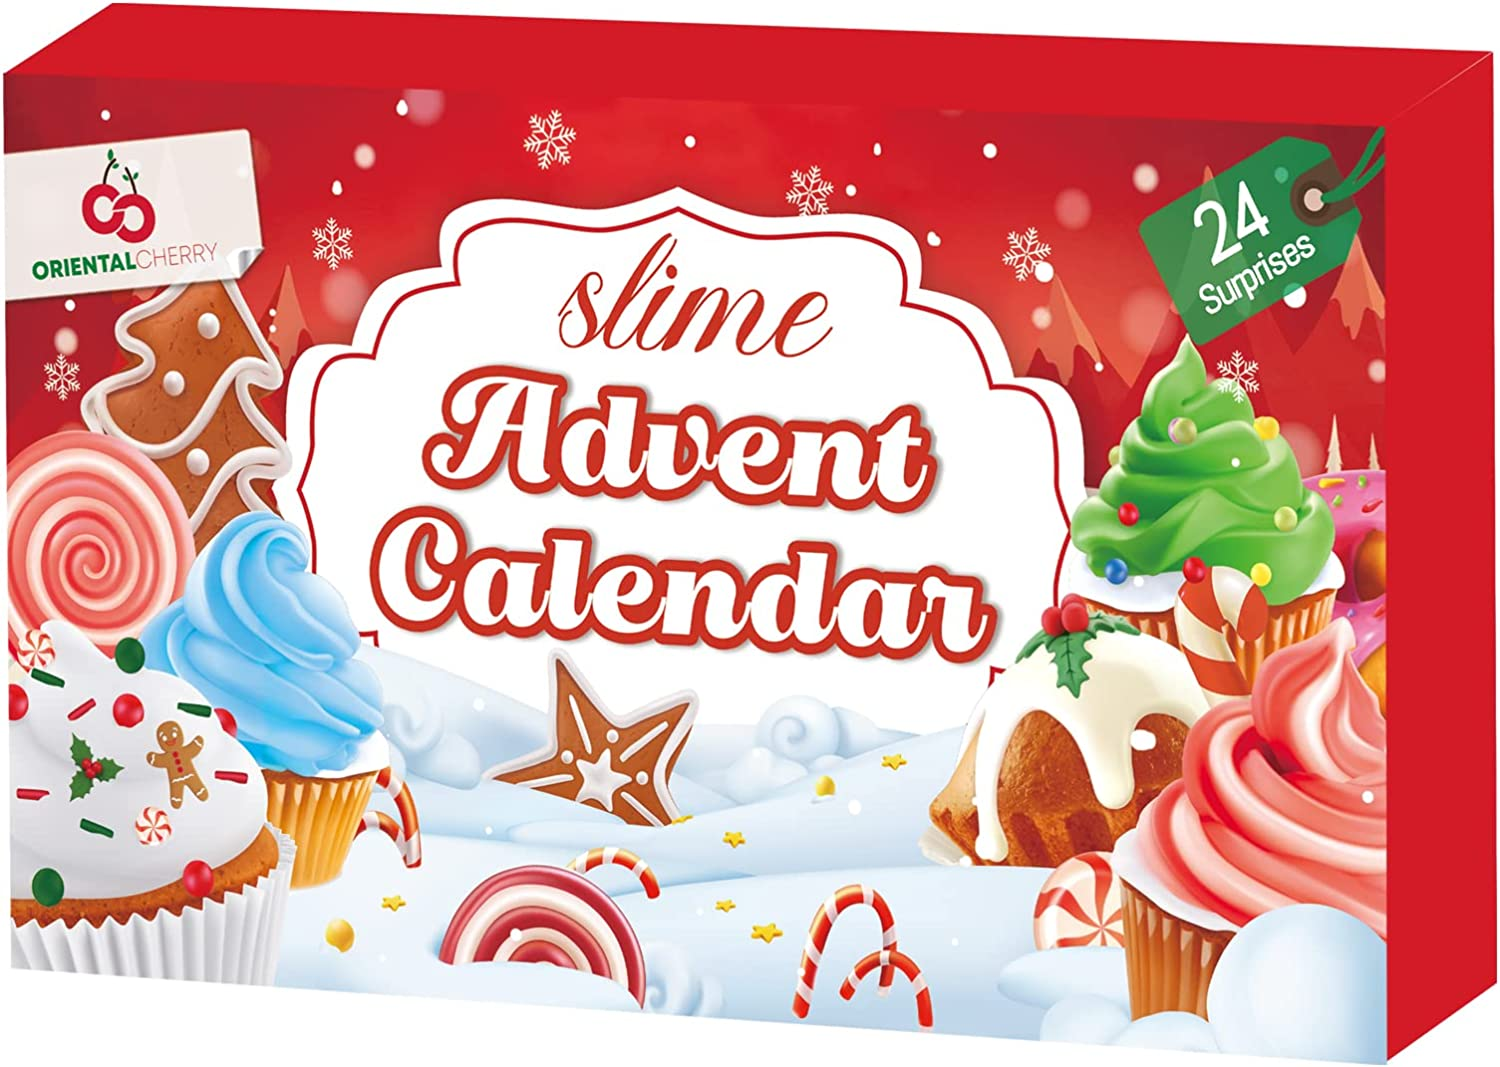 2022-oriental-cherry-slime-advent-calendar-24-days-of-slime-fun-hello-subscription